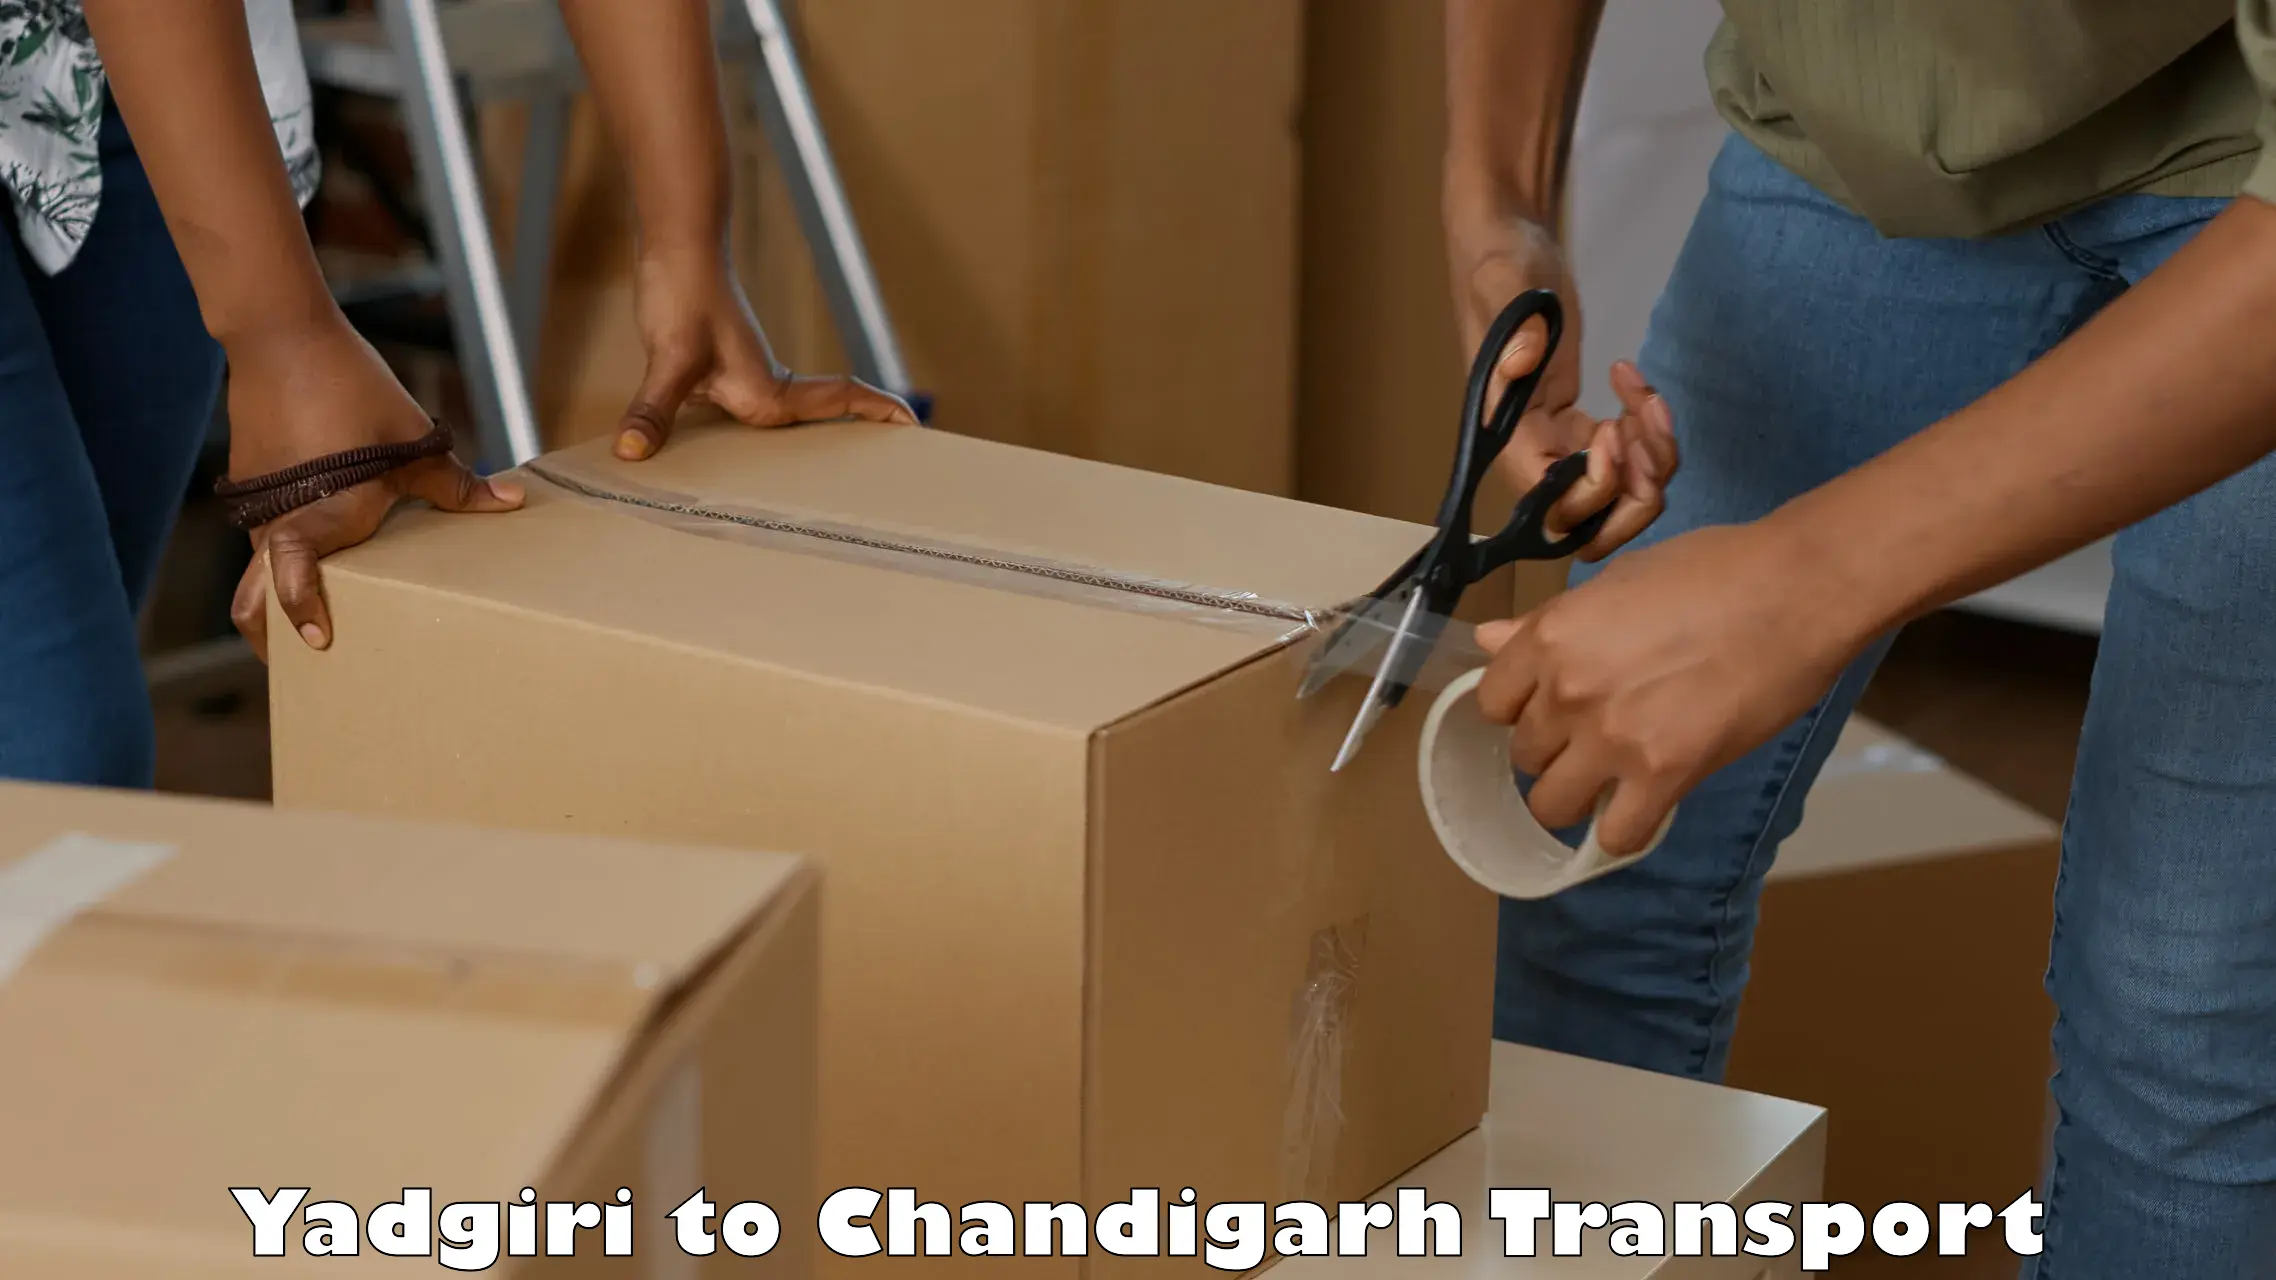 Furniture transport service Yadgiri to Kharar